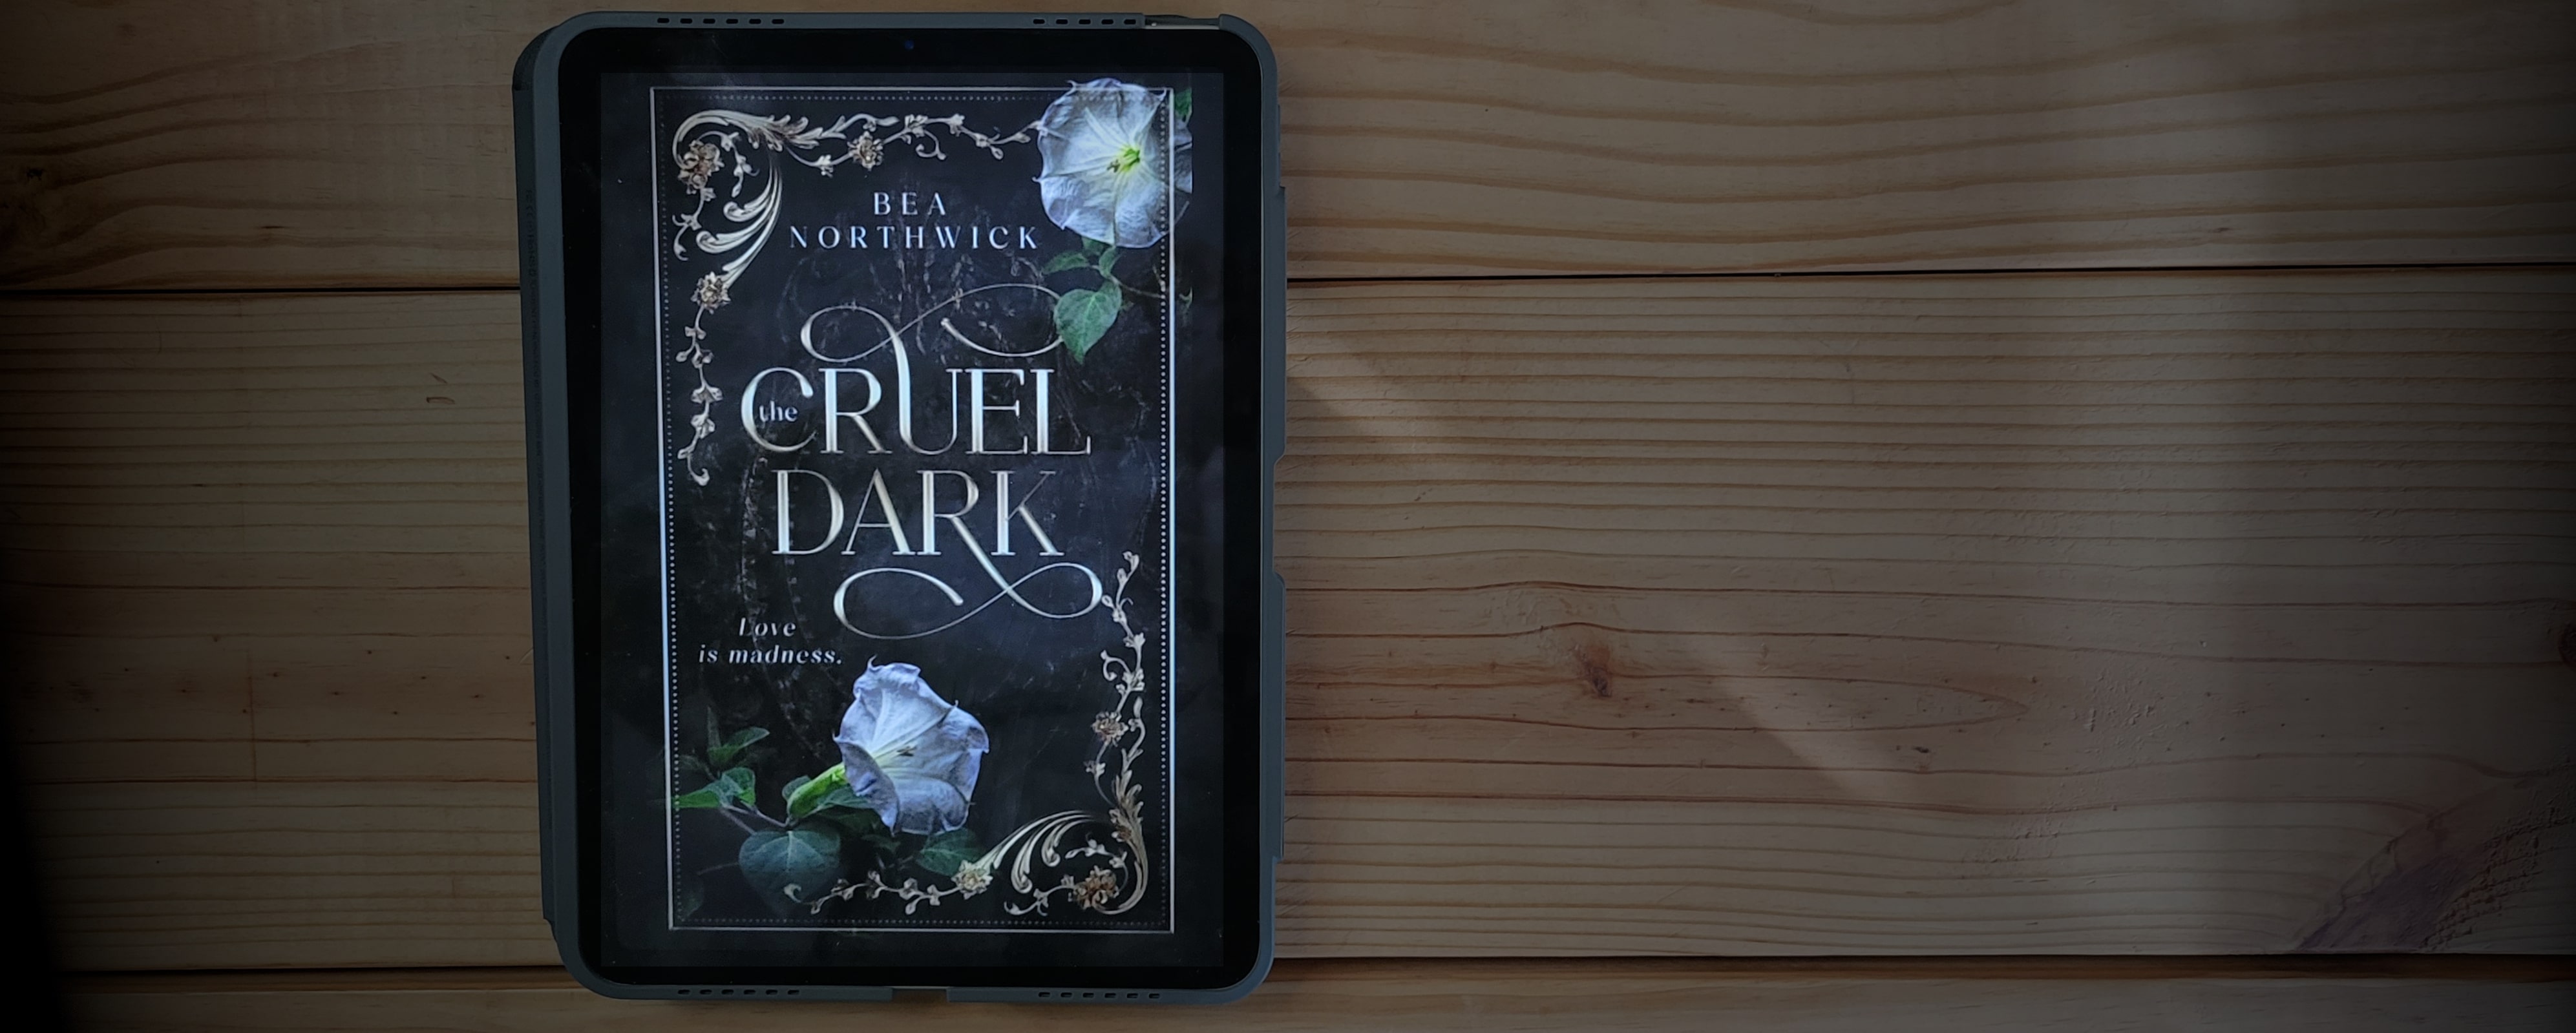 Book cover of The Cruel Dark by Bea Northwick